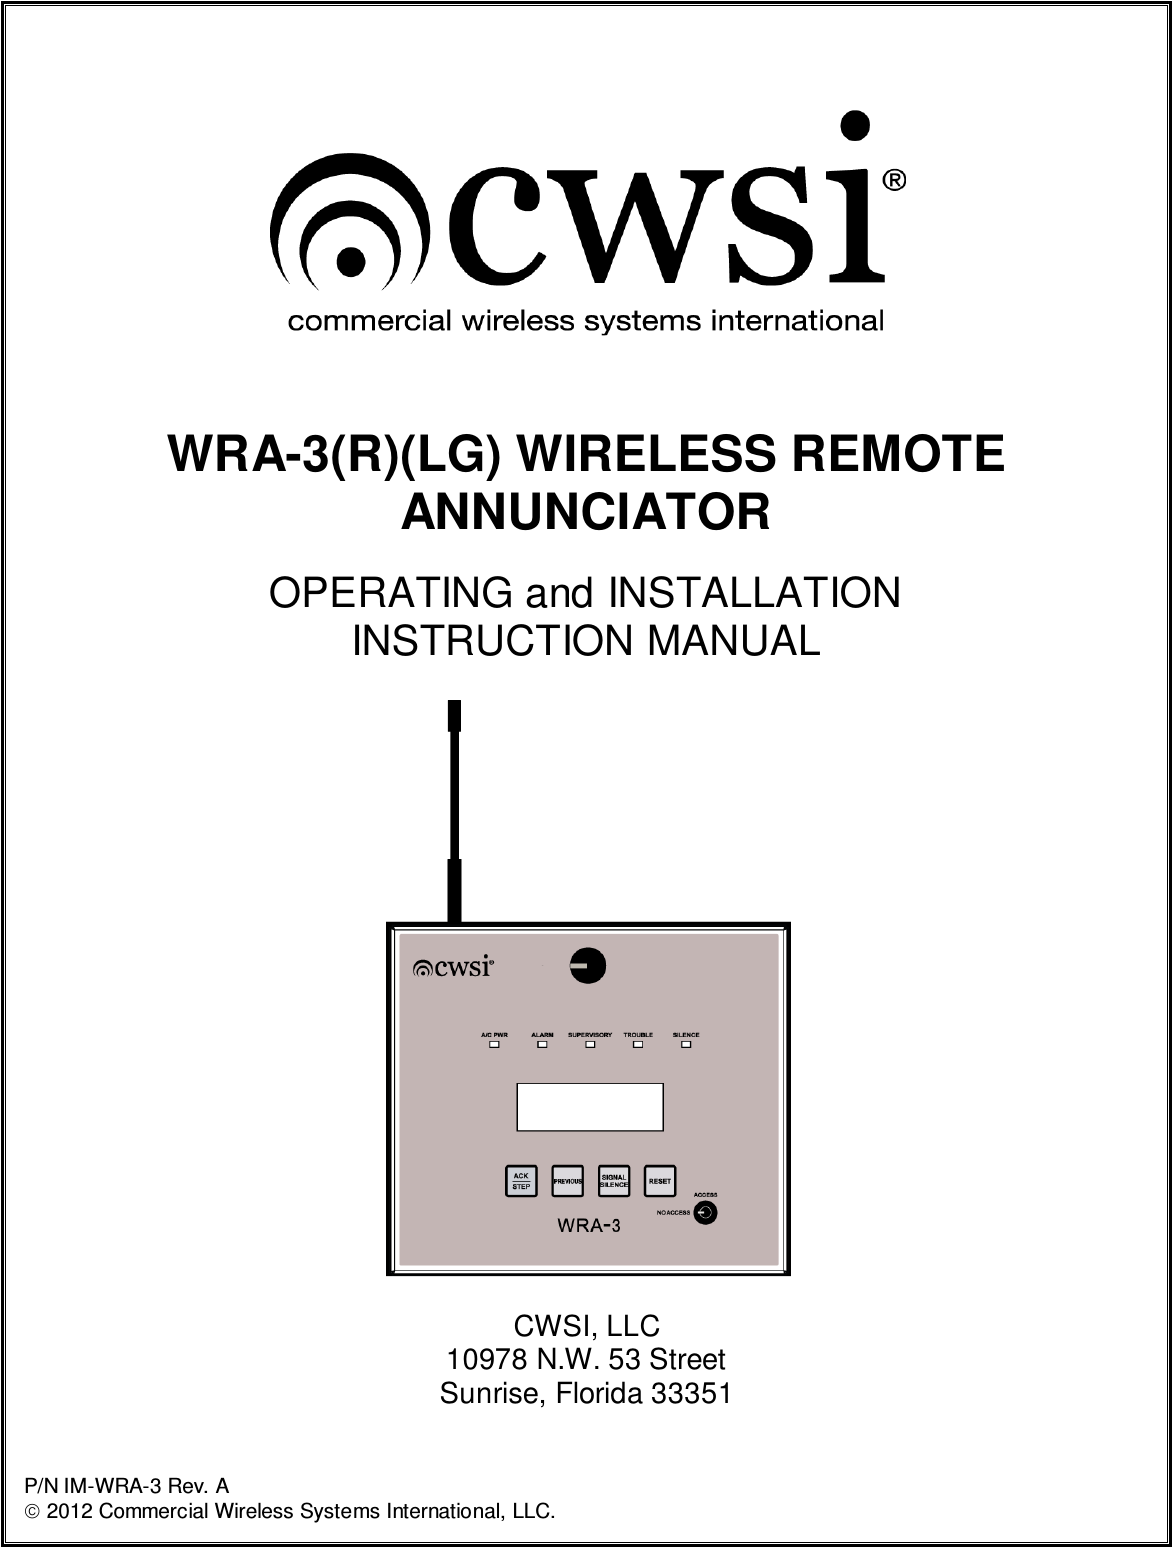  P/N IM-WRA-3 Rev. A  2012 Commercial Wireless Systems International, LLC.                                                                WRA-3(R)(LG) WIRELESS REMOTE ANNUNCIATOR  OPERATING and INSTALLATION INSTRUCTION MANUAL    CWSI, LLC 10978 N.W. 53 Street Sunrise, Florida 33351  